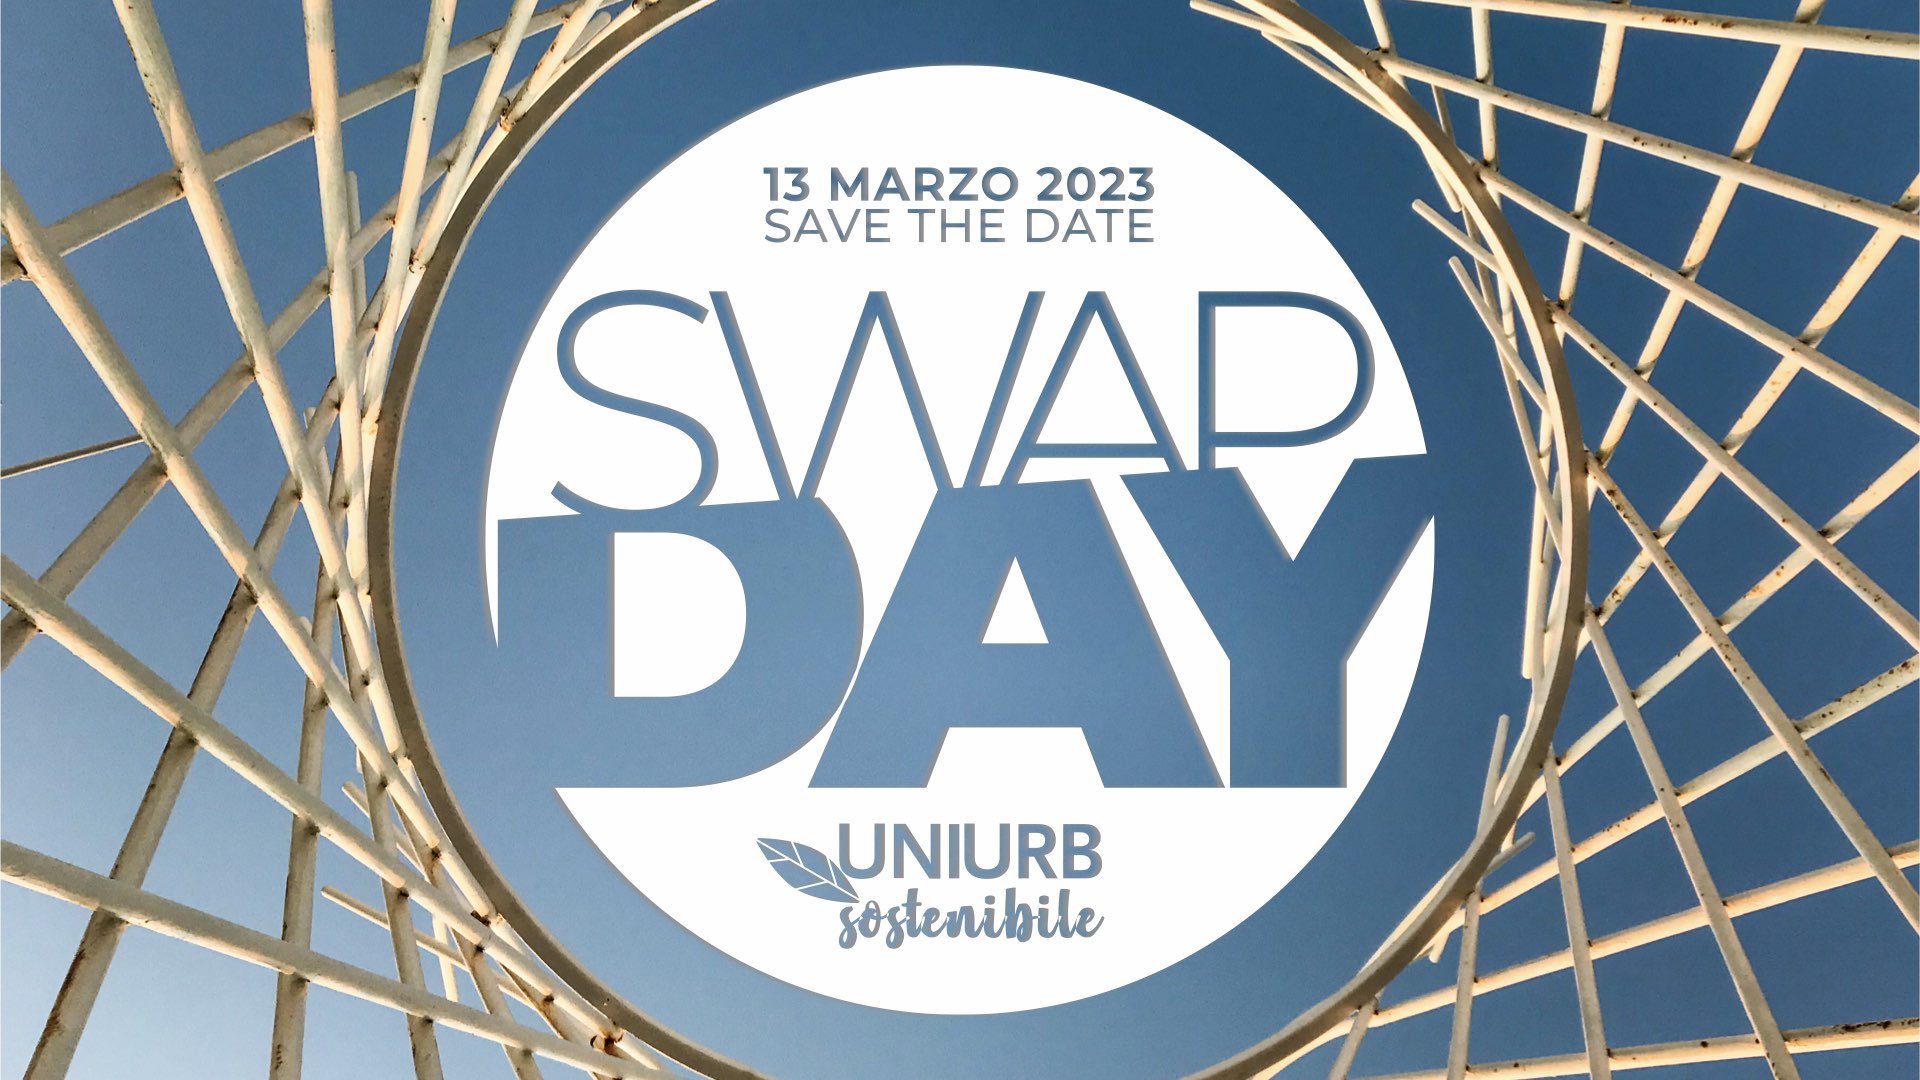 Swap day Uniurb - 13 marzo 2023 #savethedate